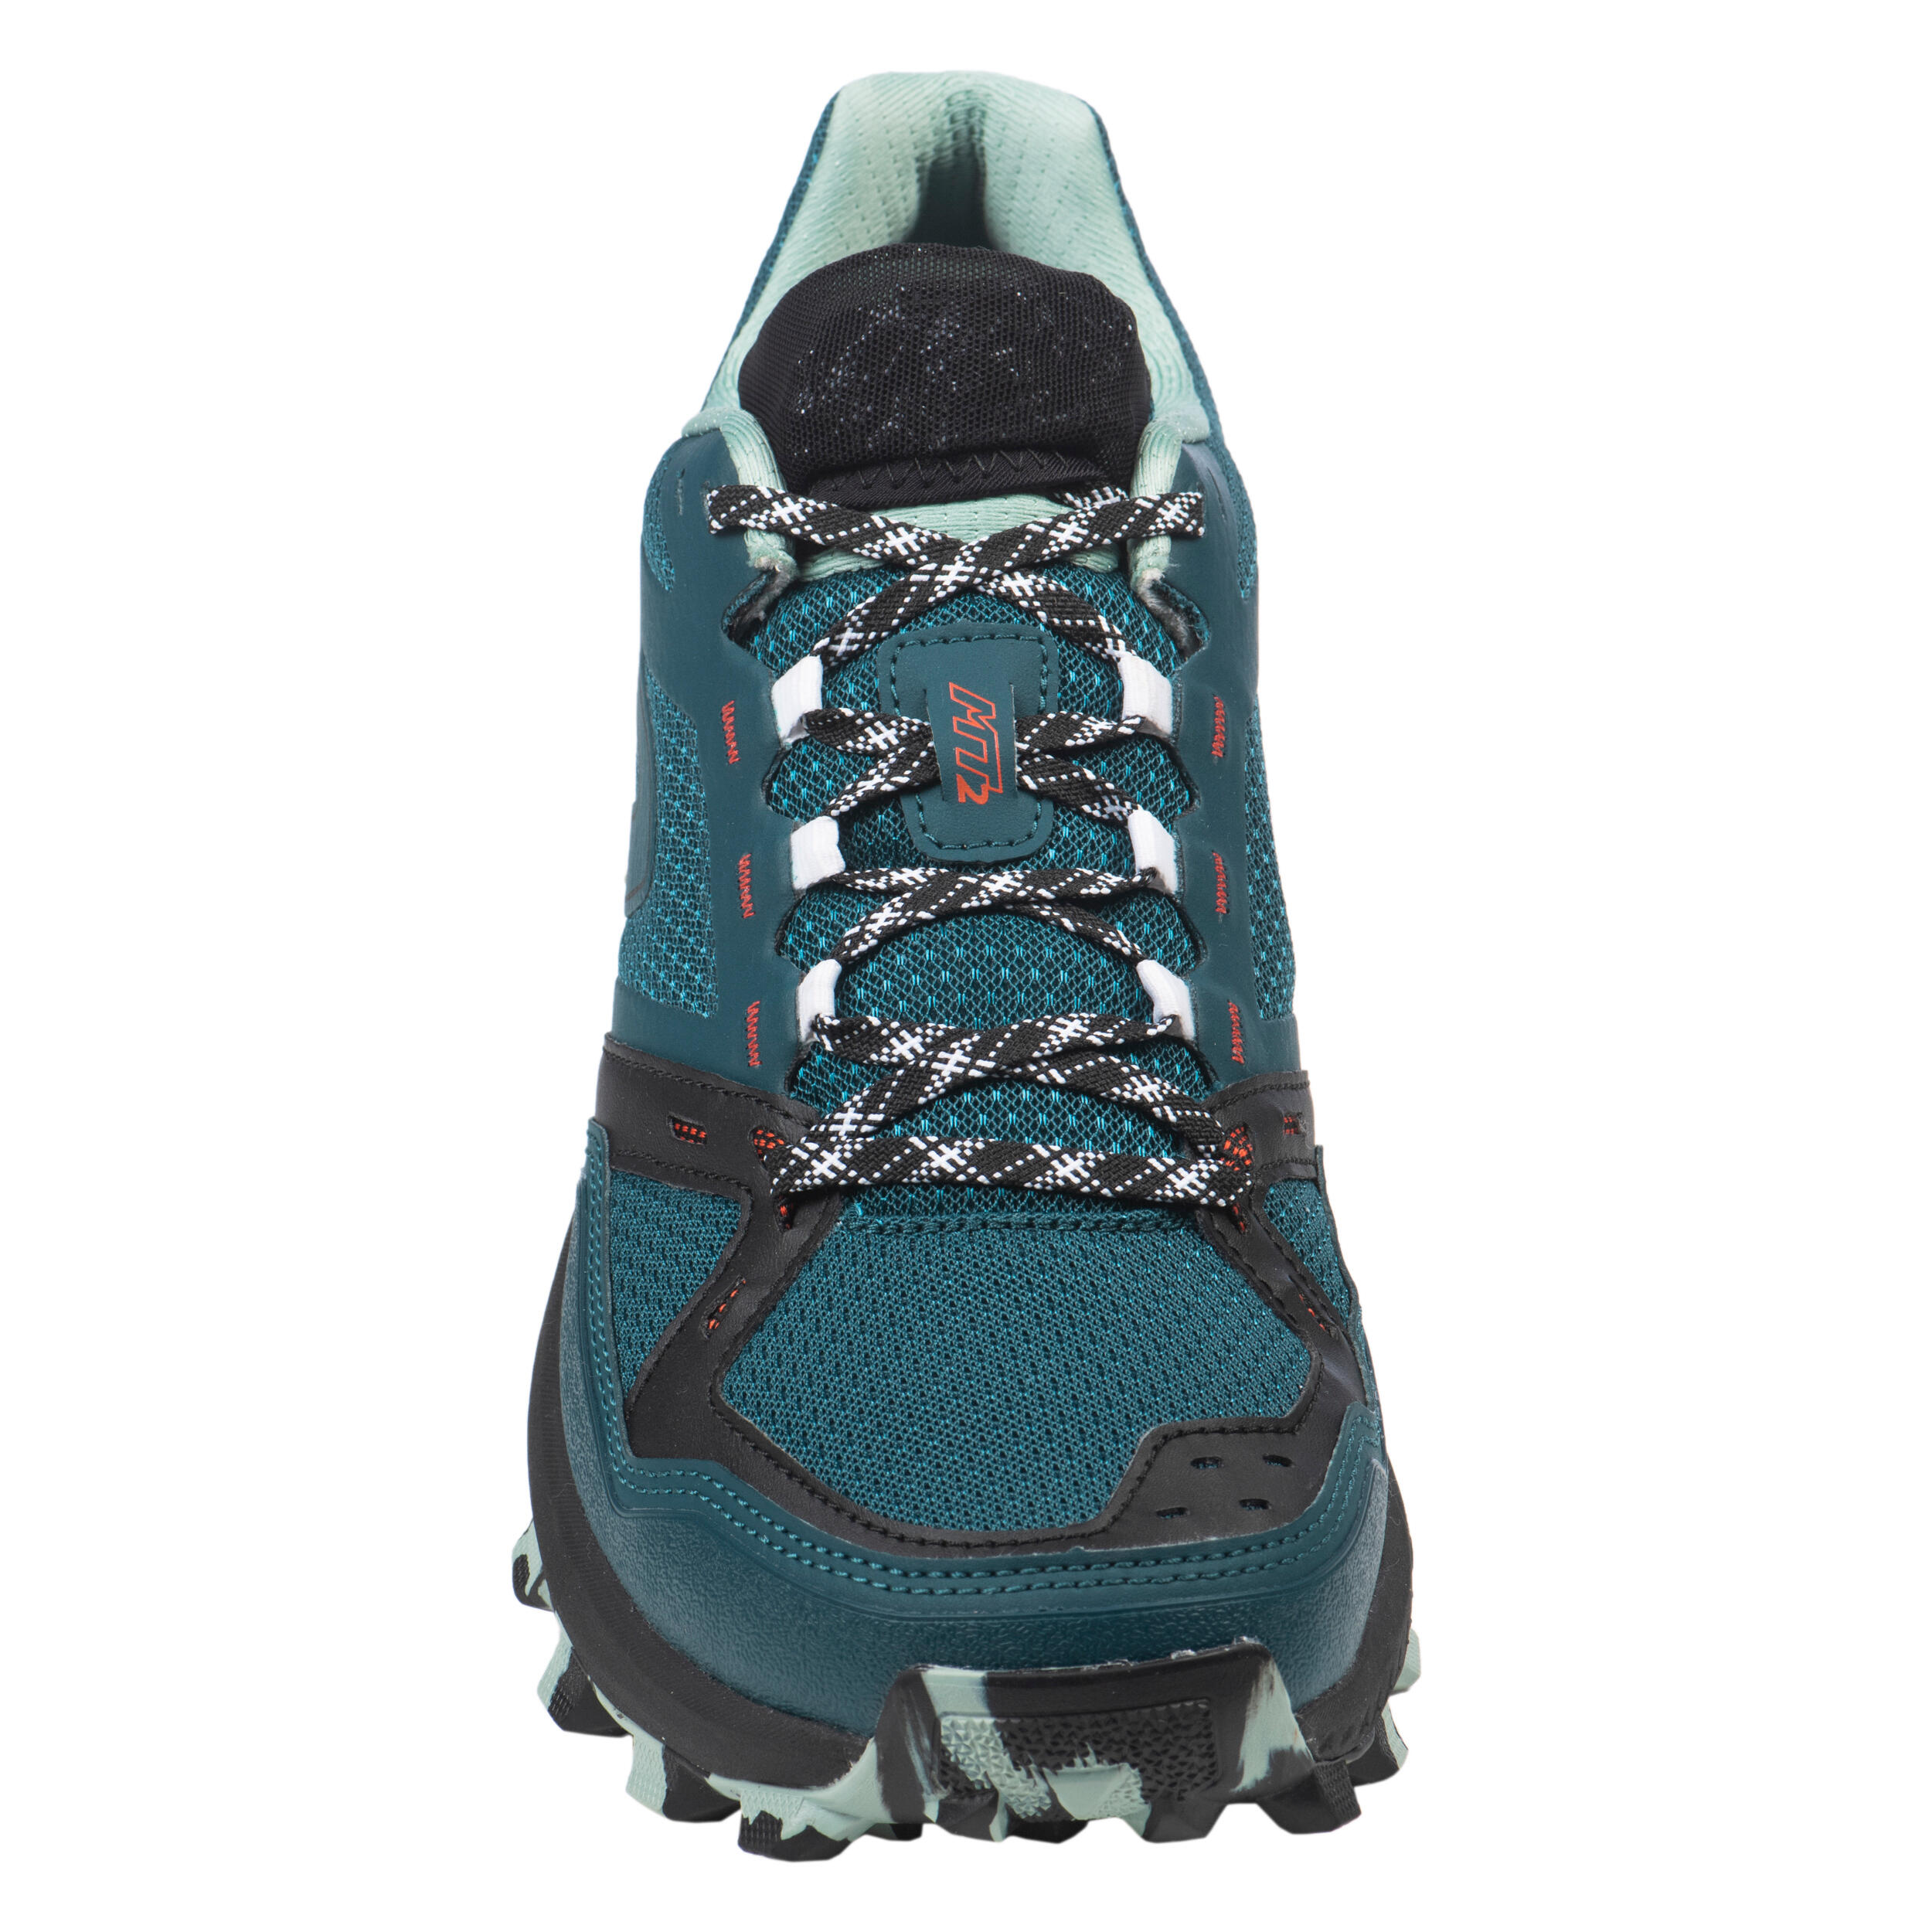 Men's Trail Running Shoes - MT 2 - EVADICT